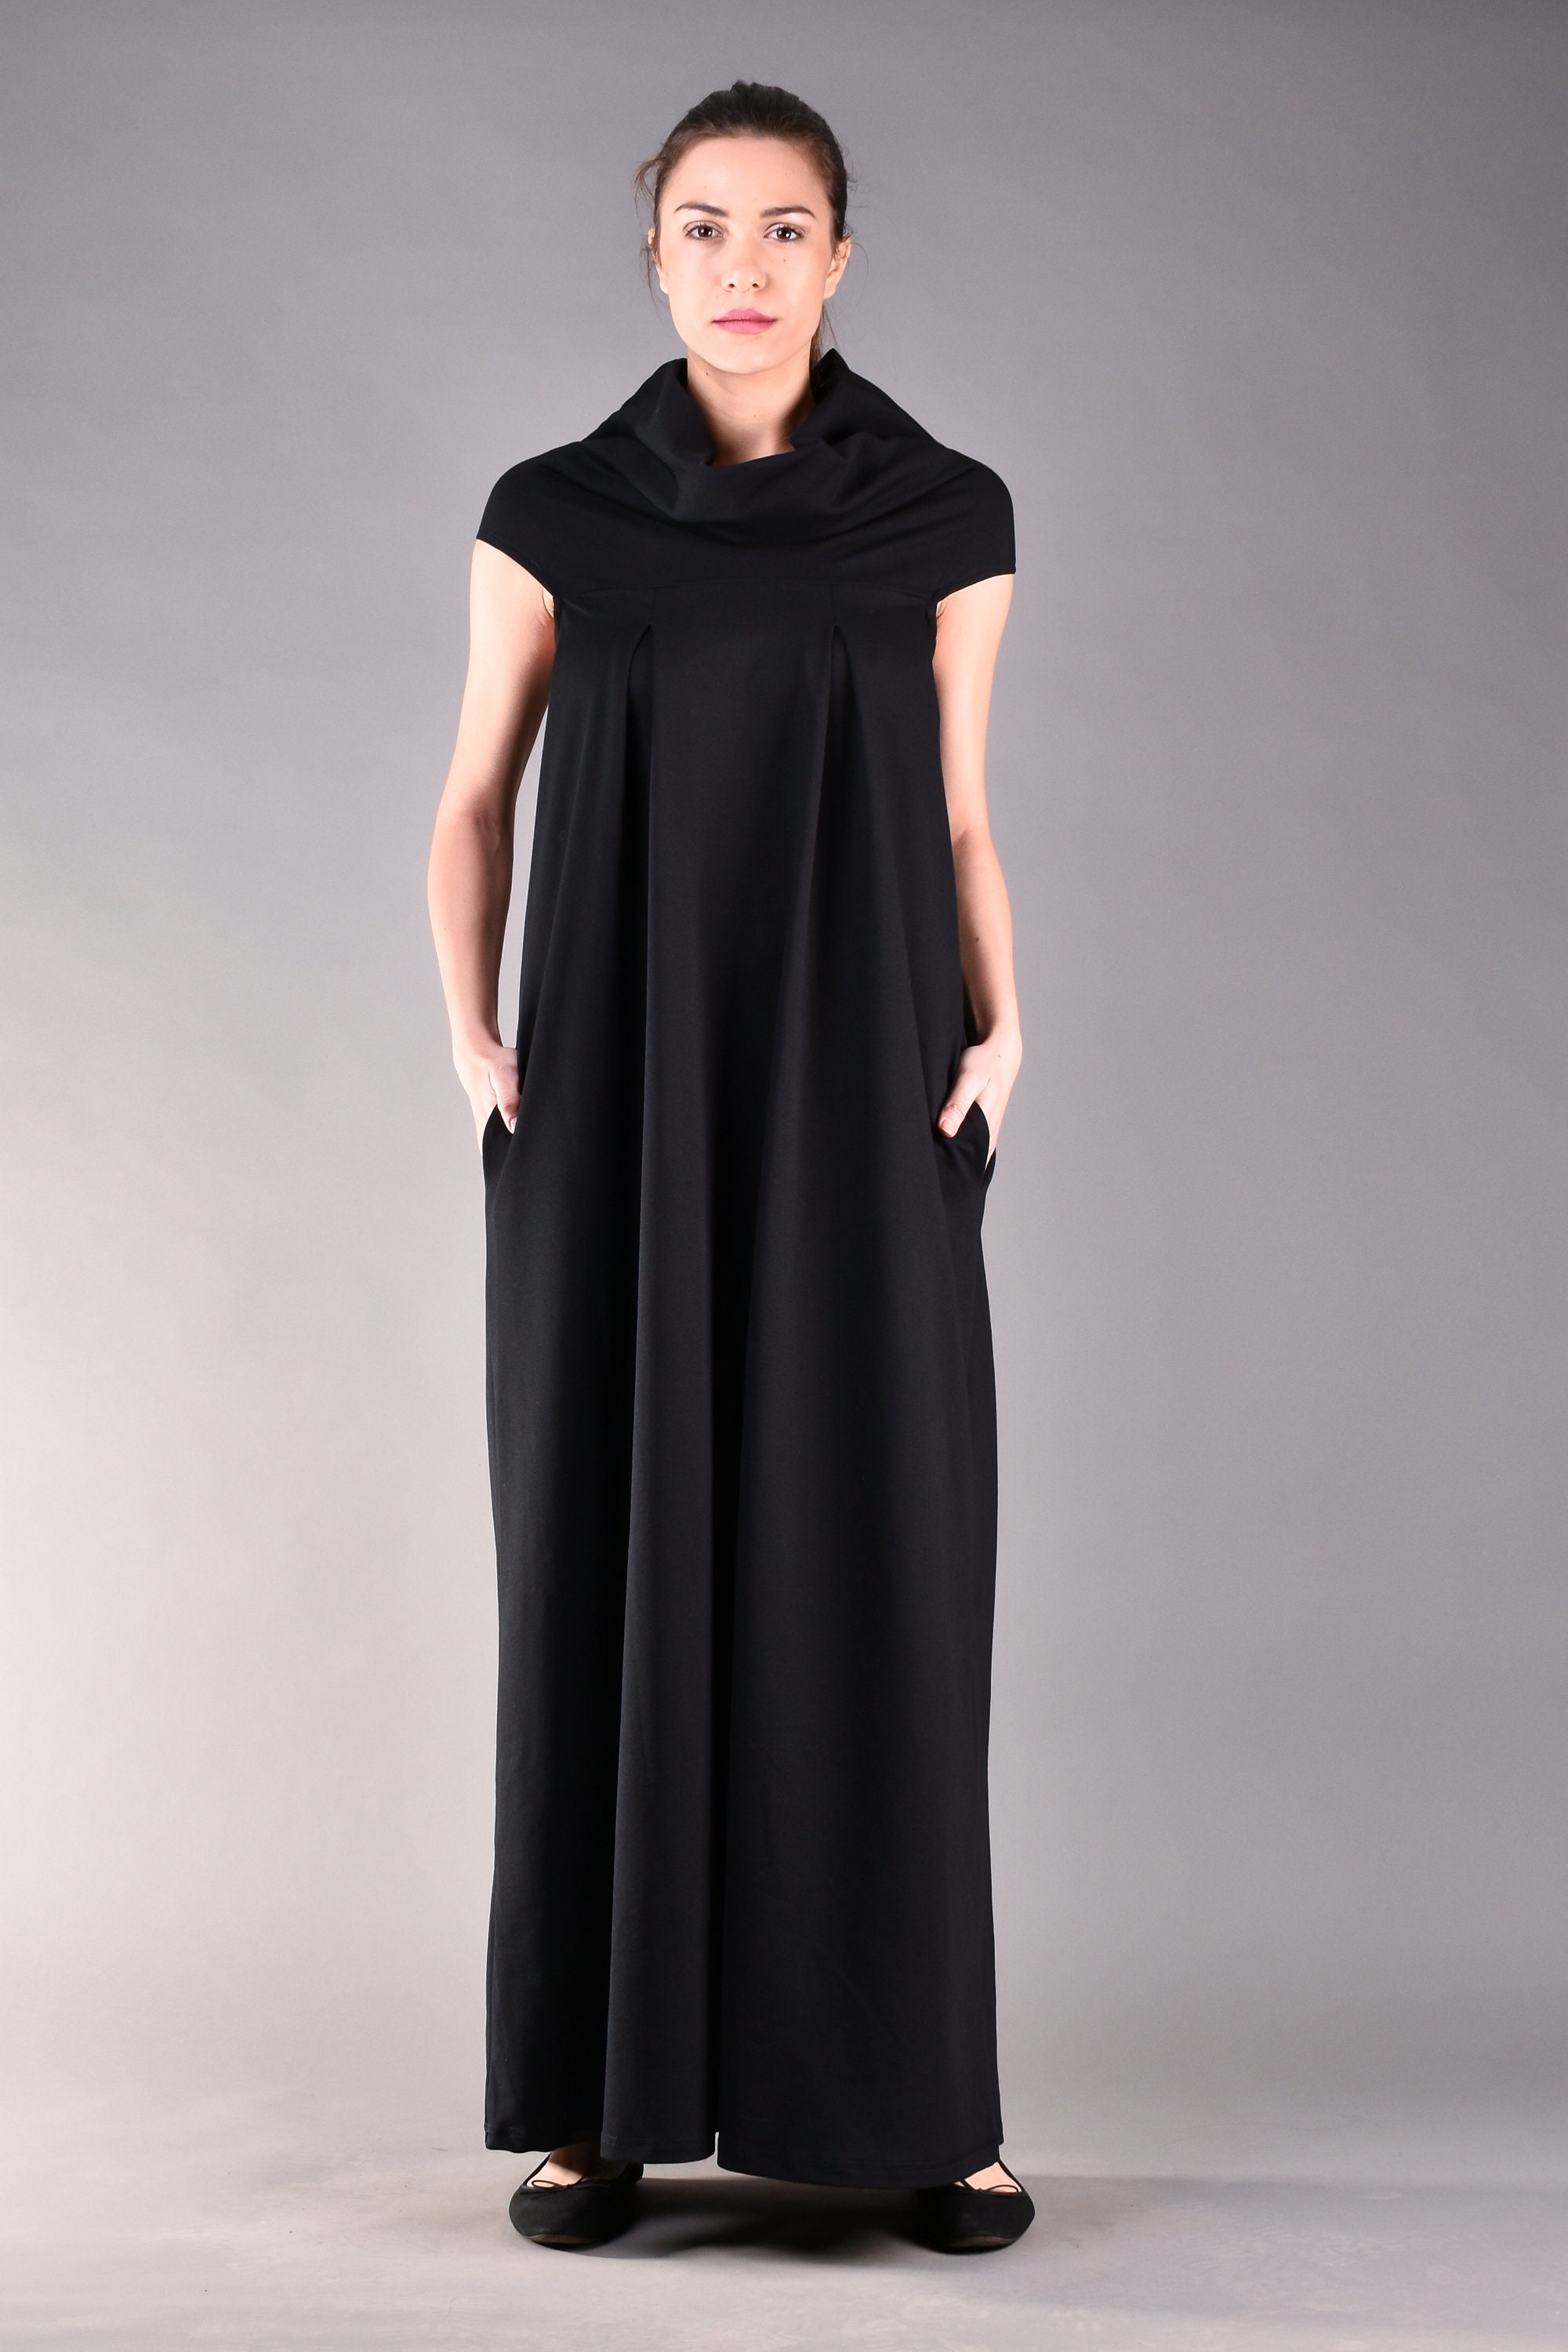 Black Long Dress Loose Dress Black Maxi Dress Sleeveless | Etsy